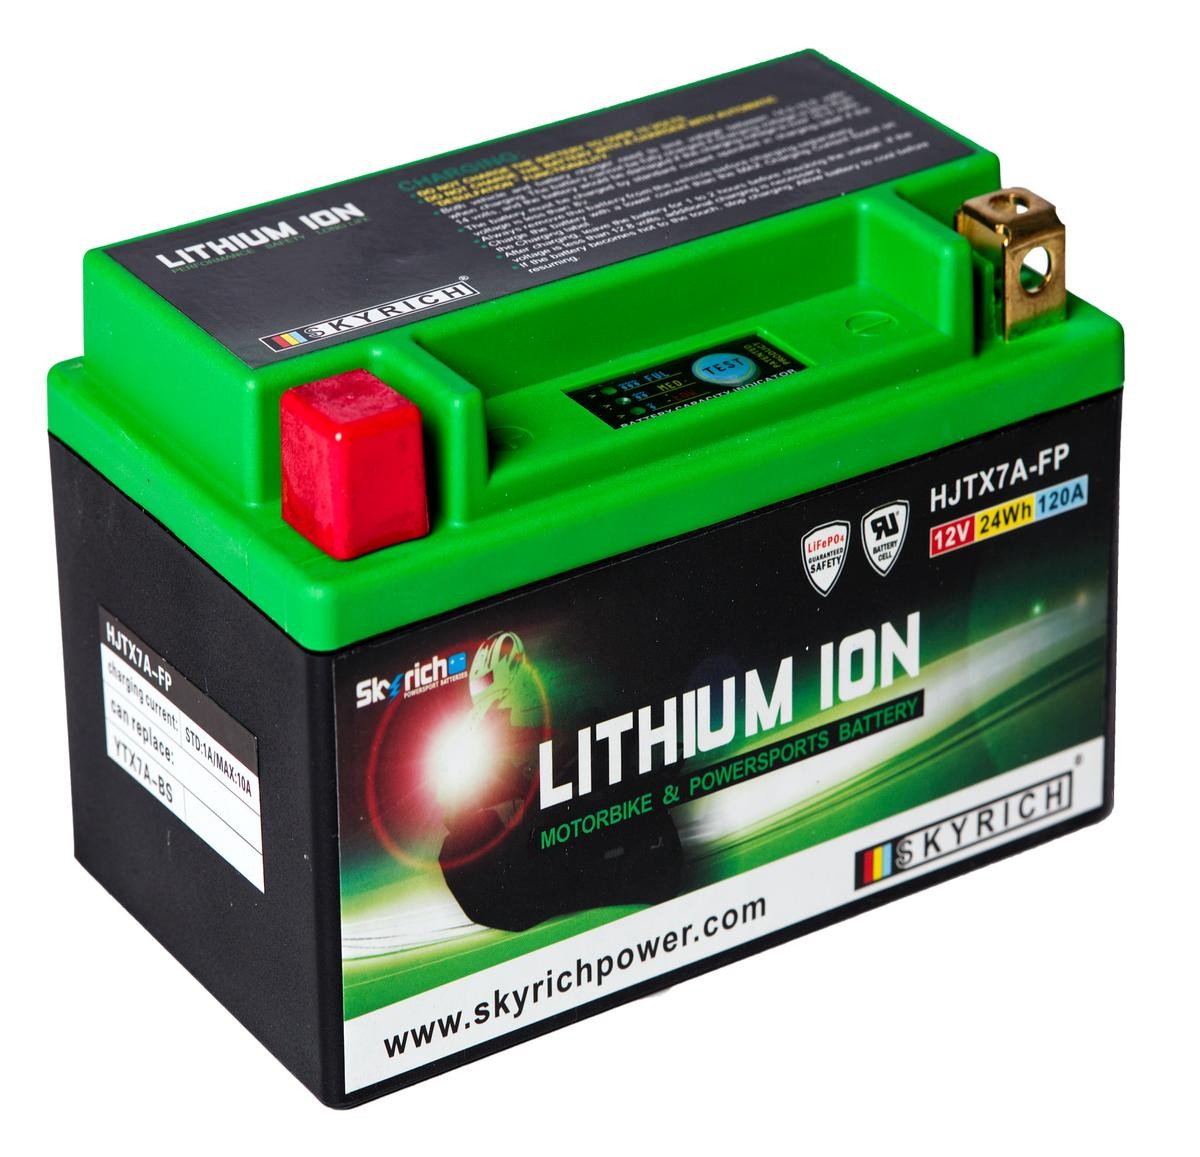 LIFAN LF QT-9 Batterie 12V 2Ah 120A N Li-Ionen-Batterie SKYRICH LITHIUM ION HJTX7A-FP